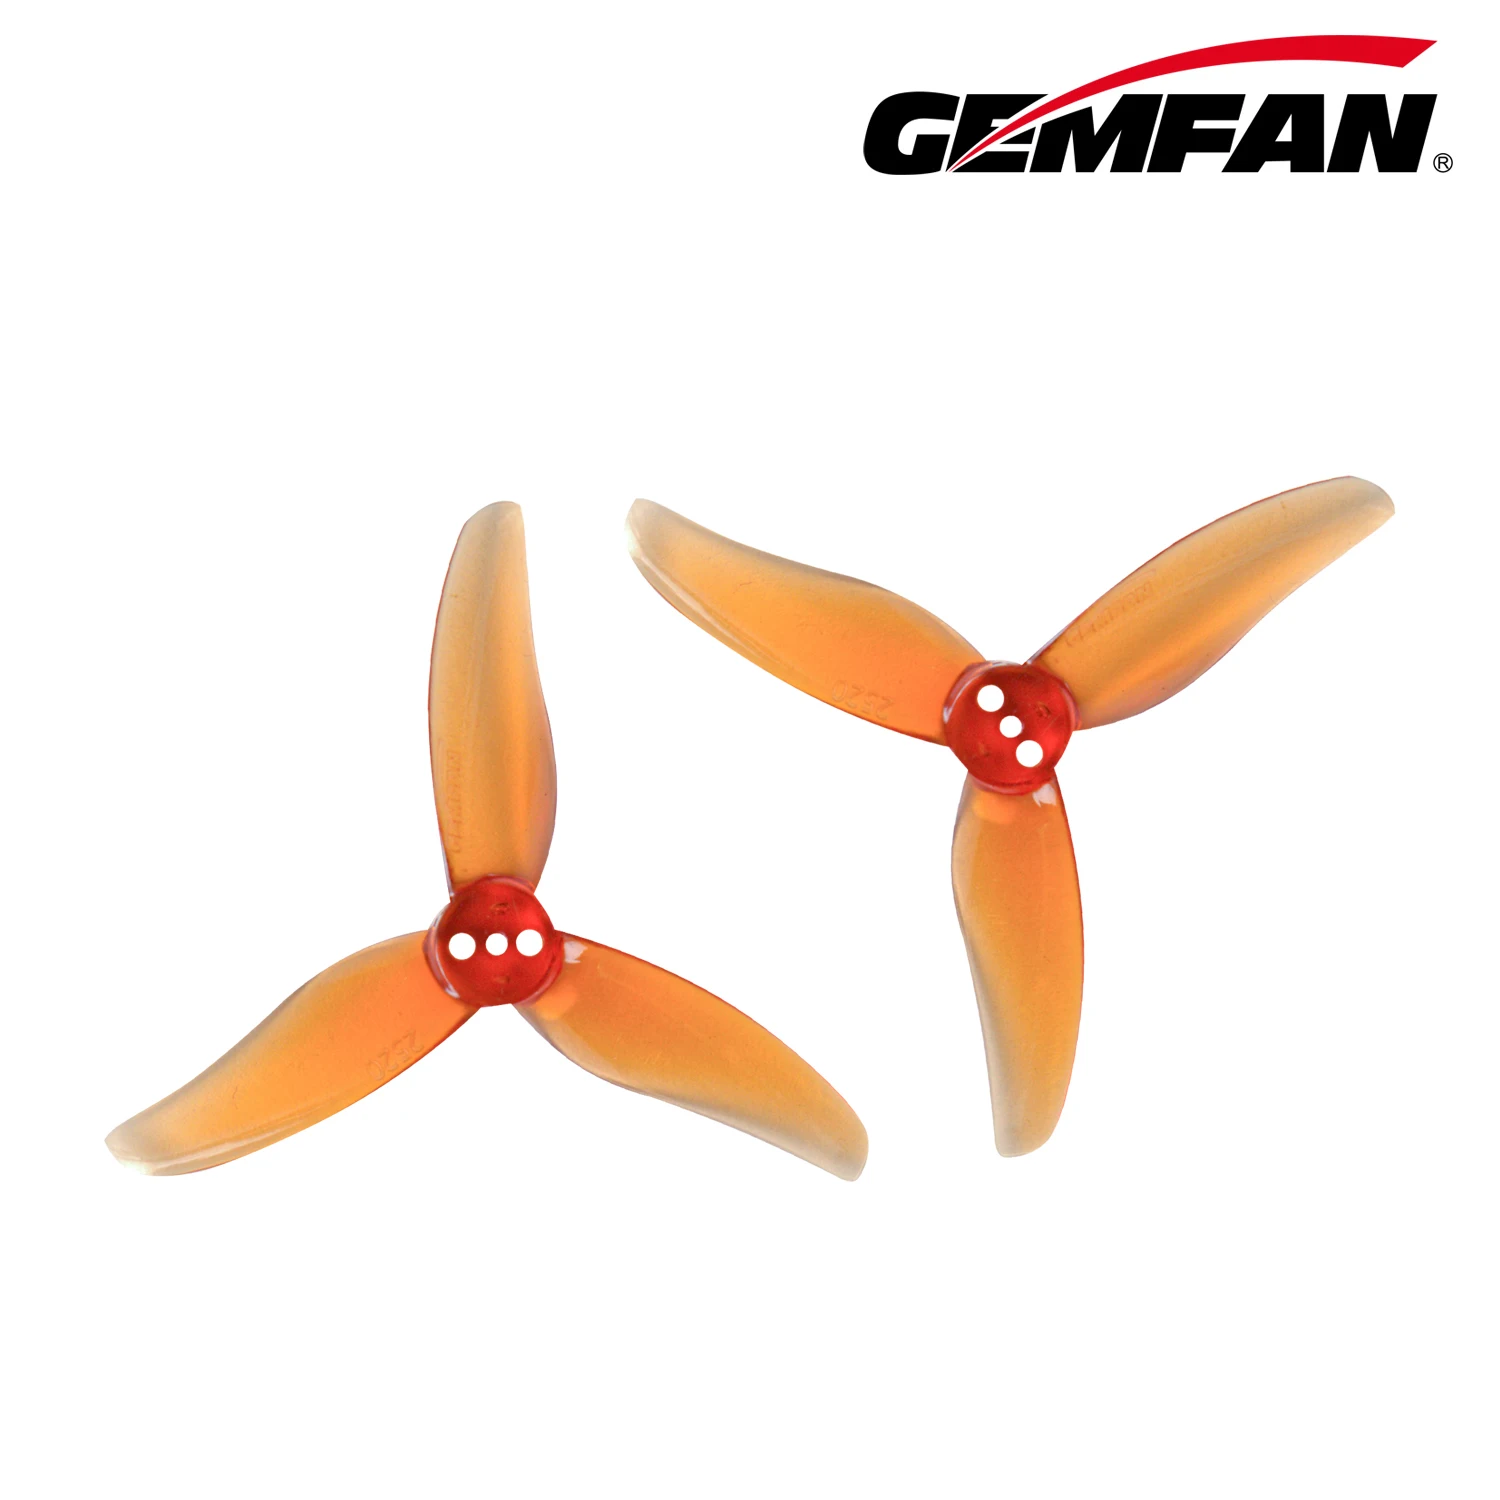 Gemfan Hurricane 2520 2.5x2 3-blade PC 1.5mm Orange propeller